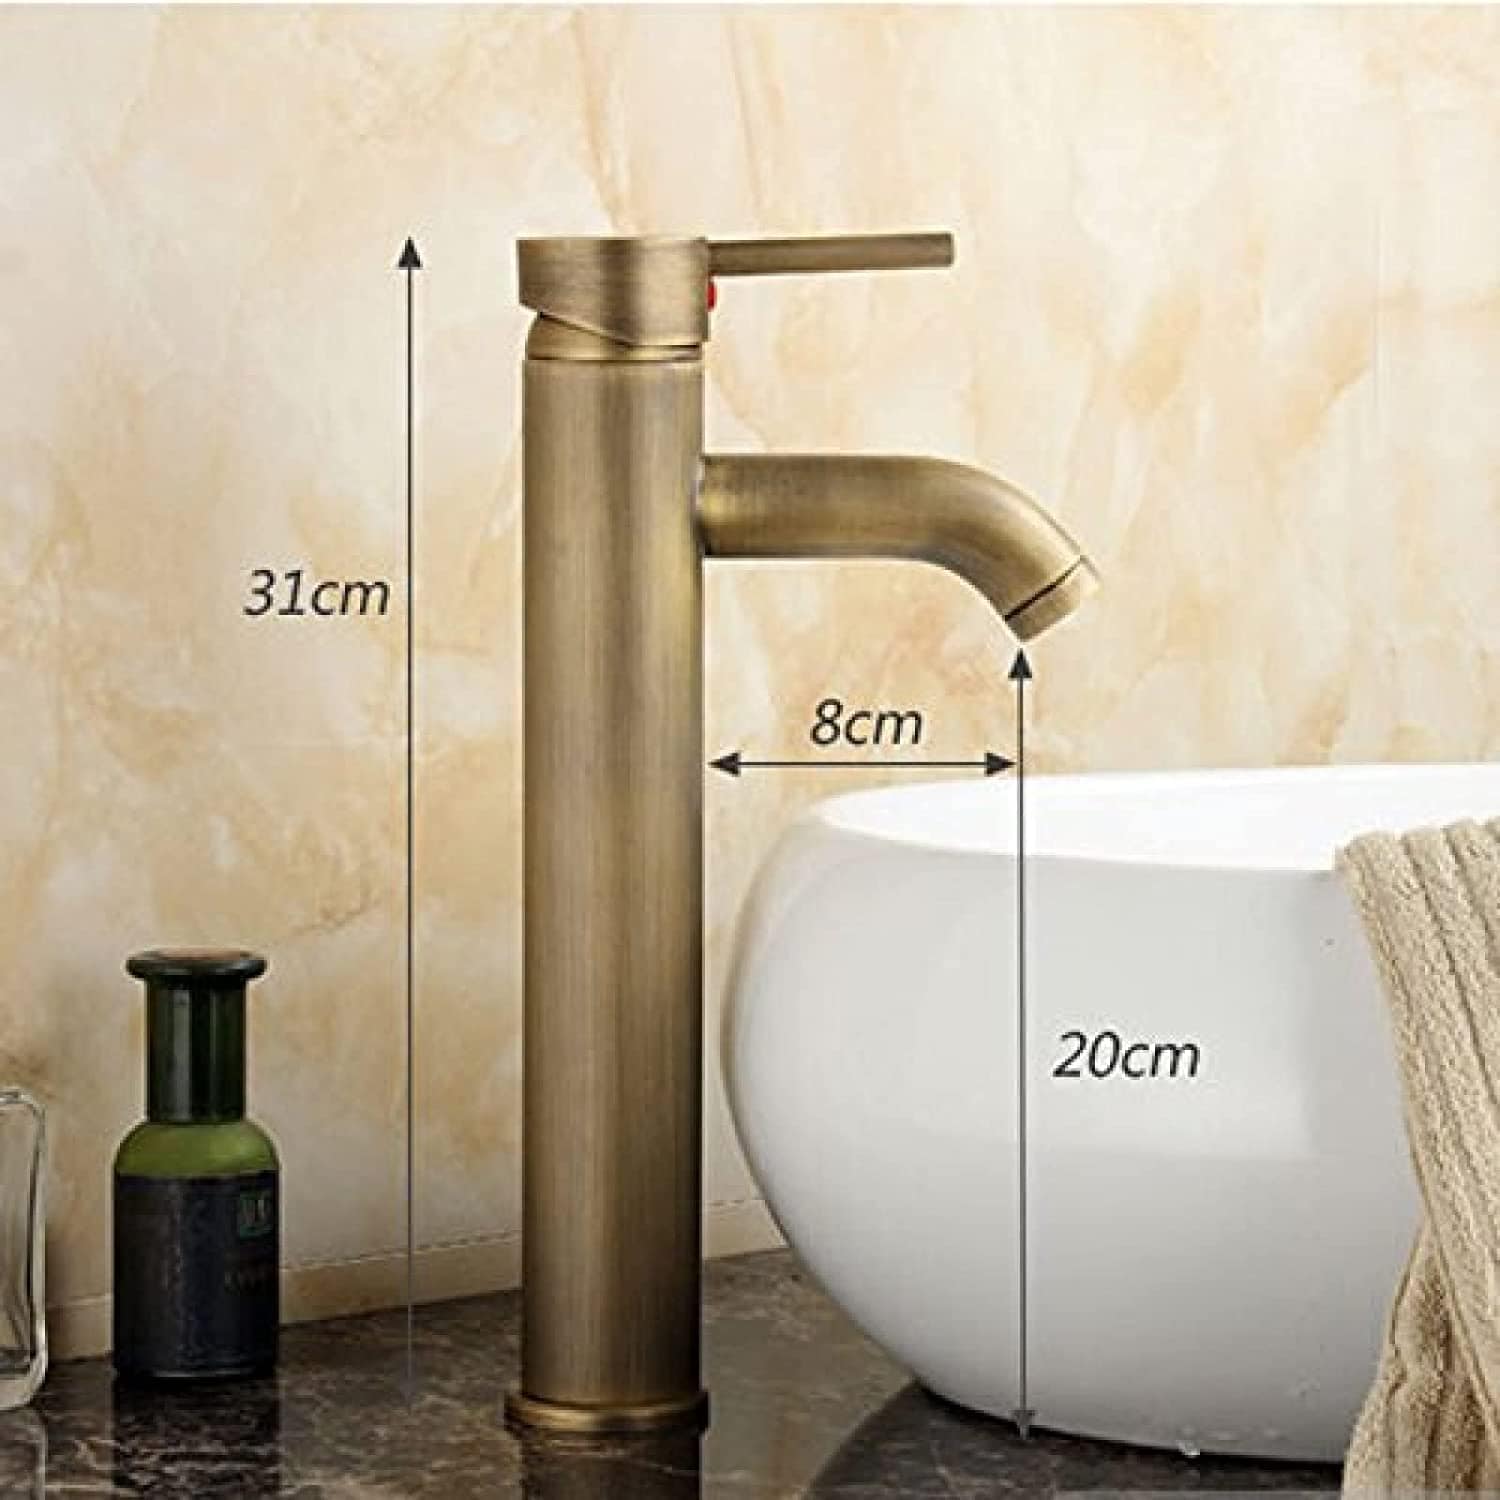 Antique Bronze Bathroom Faucet - Premium  from 𝐵𝑒𝓈𝓉 𝒟𝑒𝒸𝑜𝓇𝓏 - Just $49.95! Shop now at 𝐵𝑒𝓈𝓉 𝒟𝑒𝒸𝑜𝓇𝓏